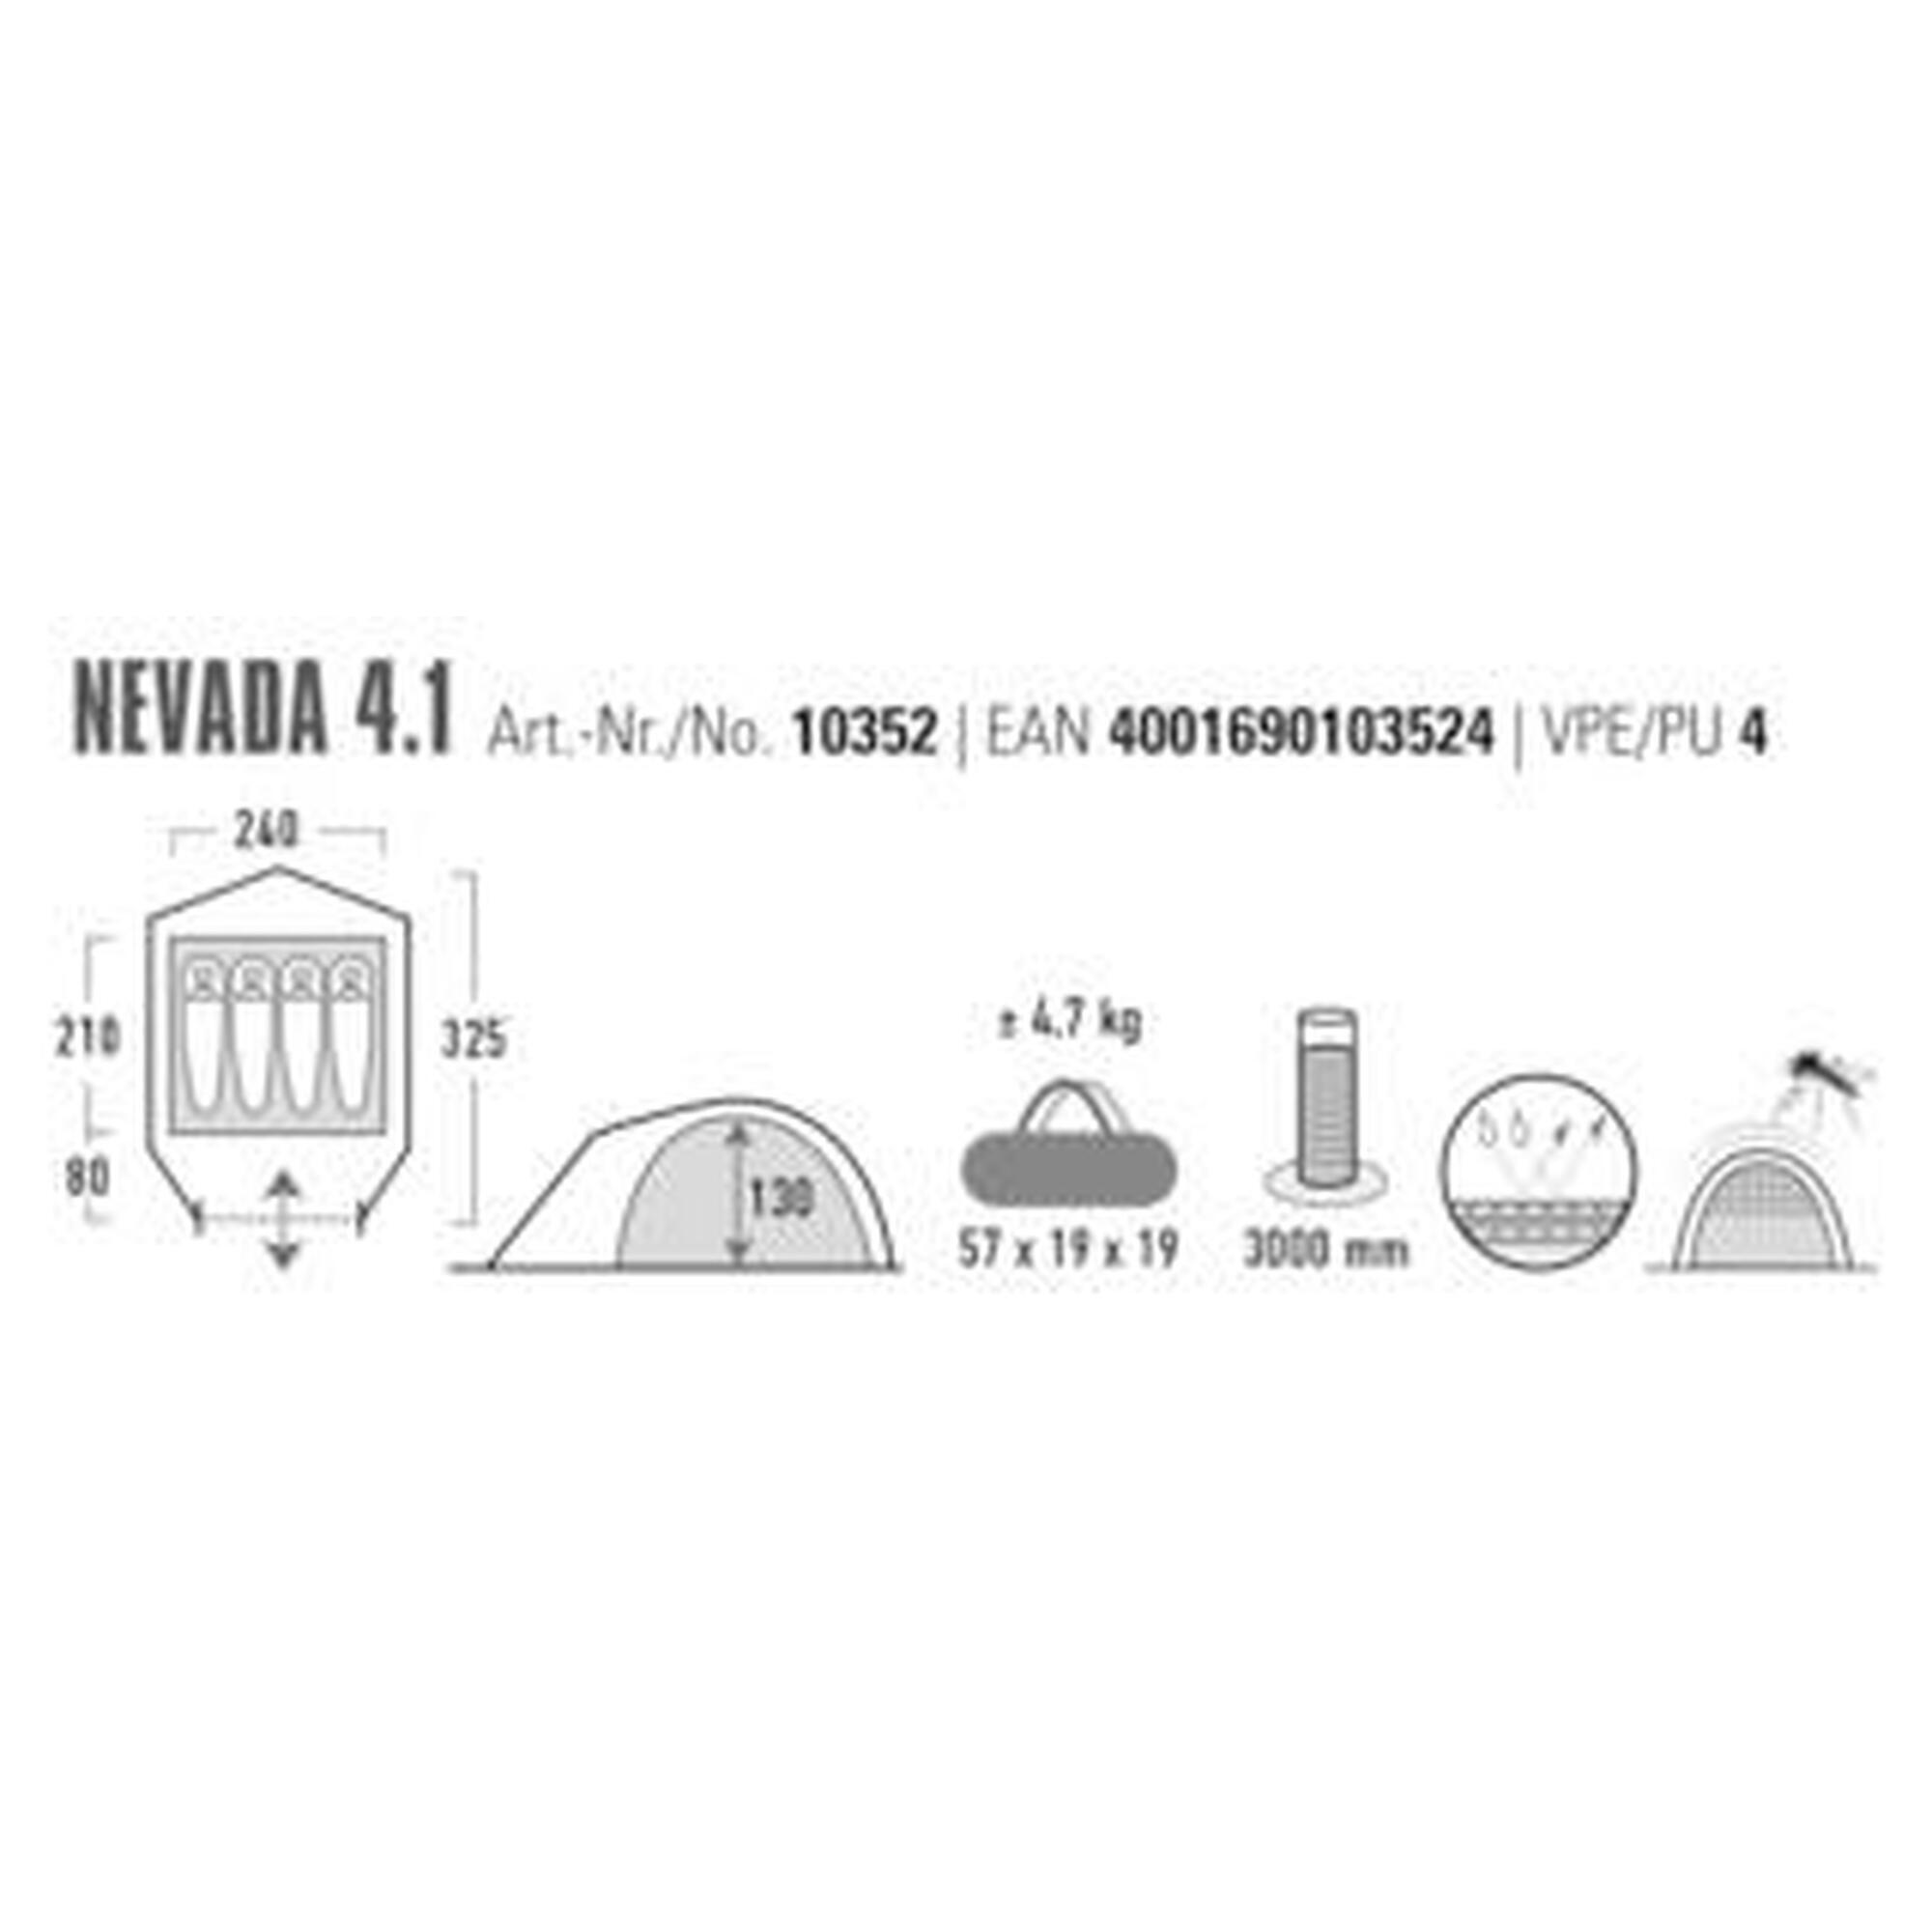 Tente dôme High Peak Nevada 4.1, sans PFC, protection solaire UV 80